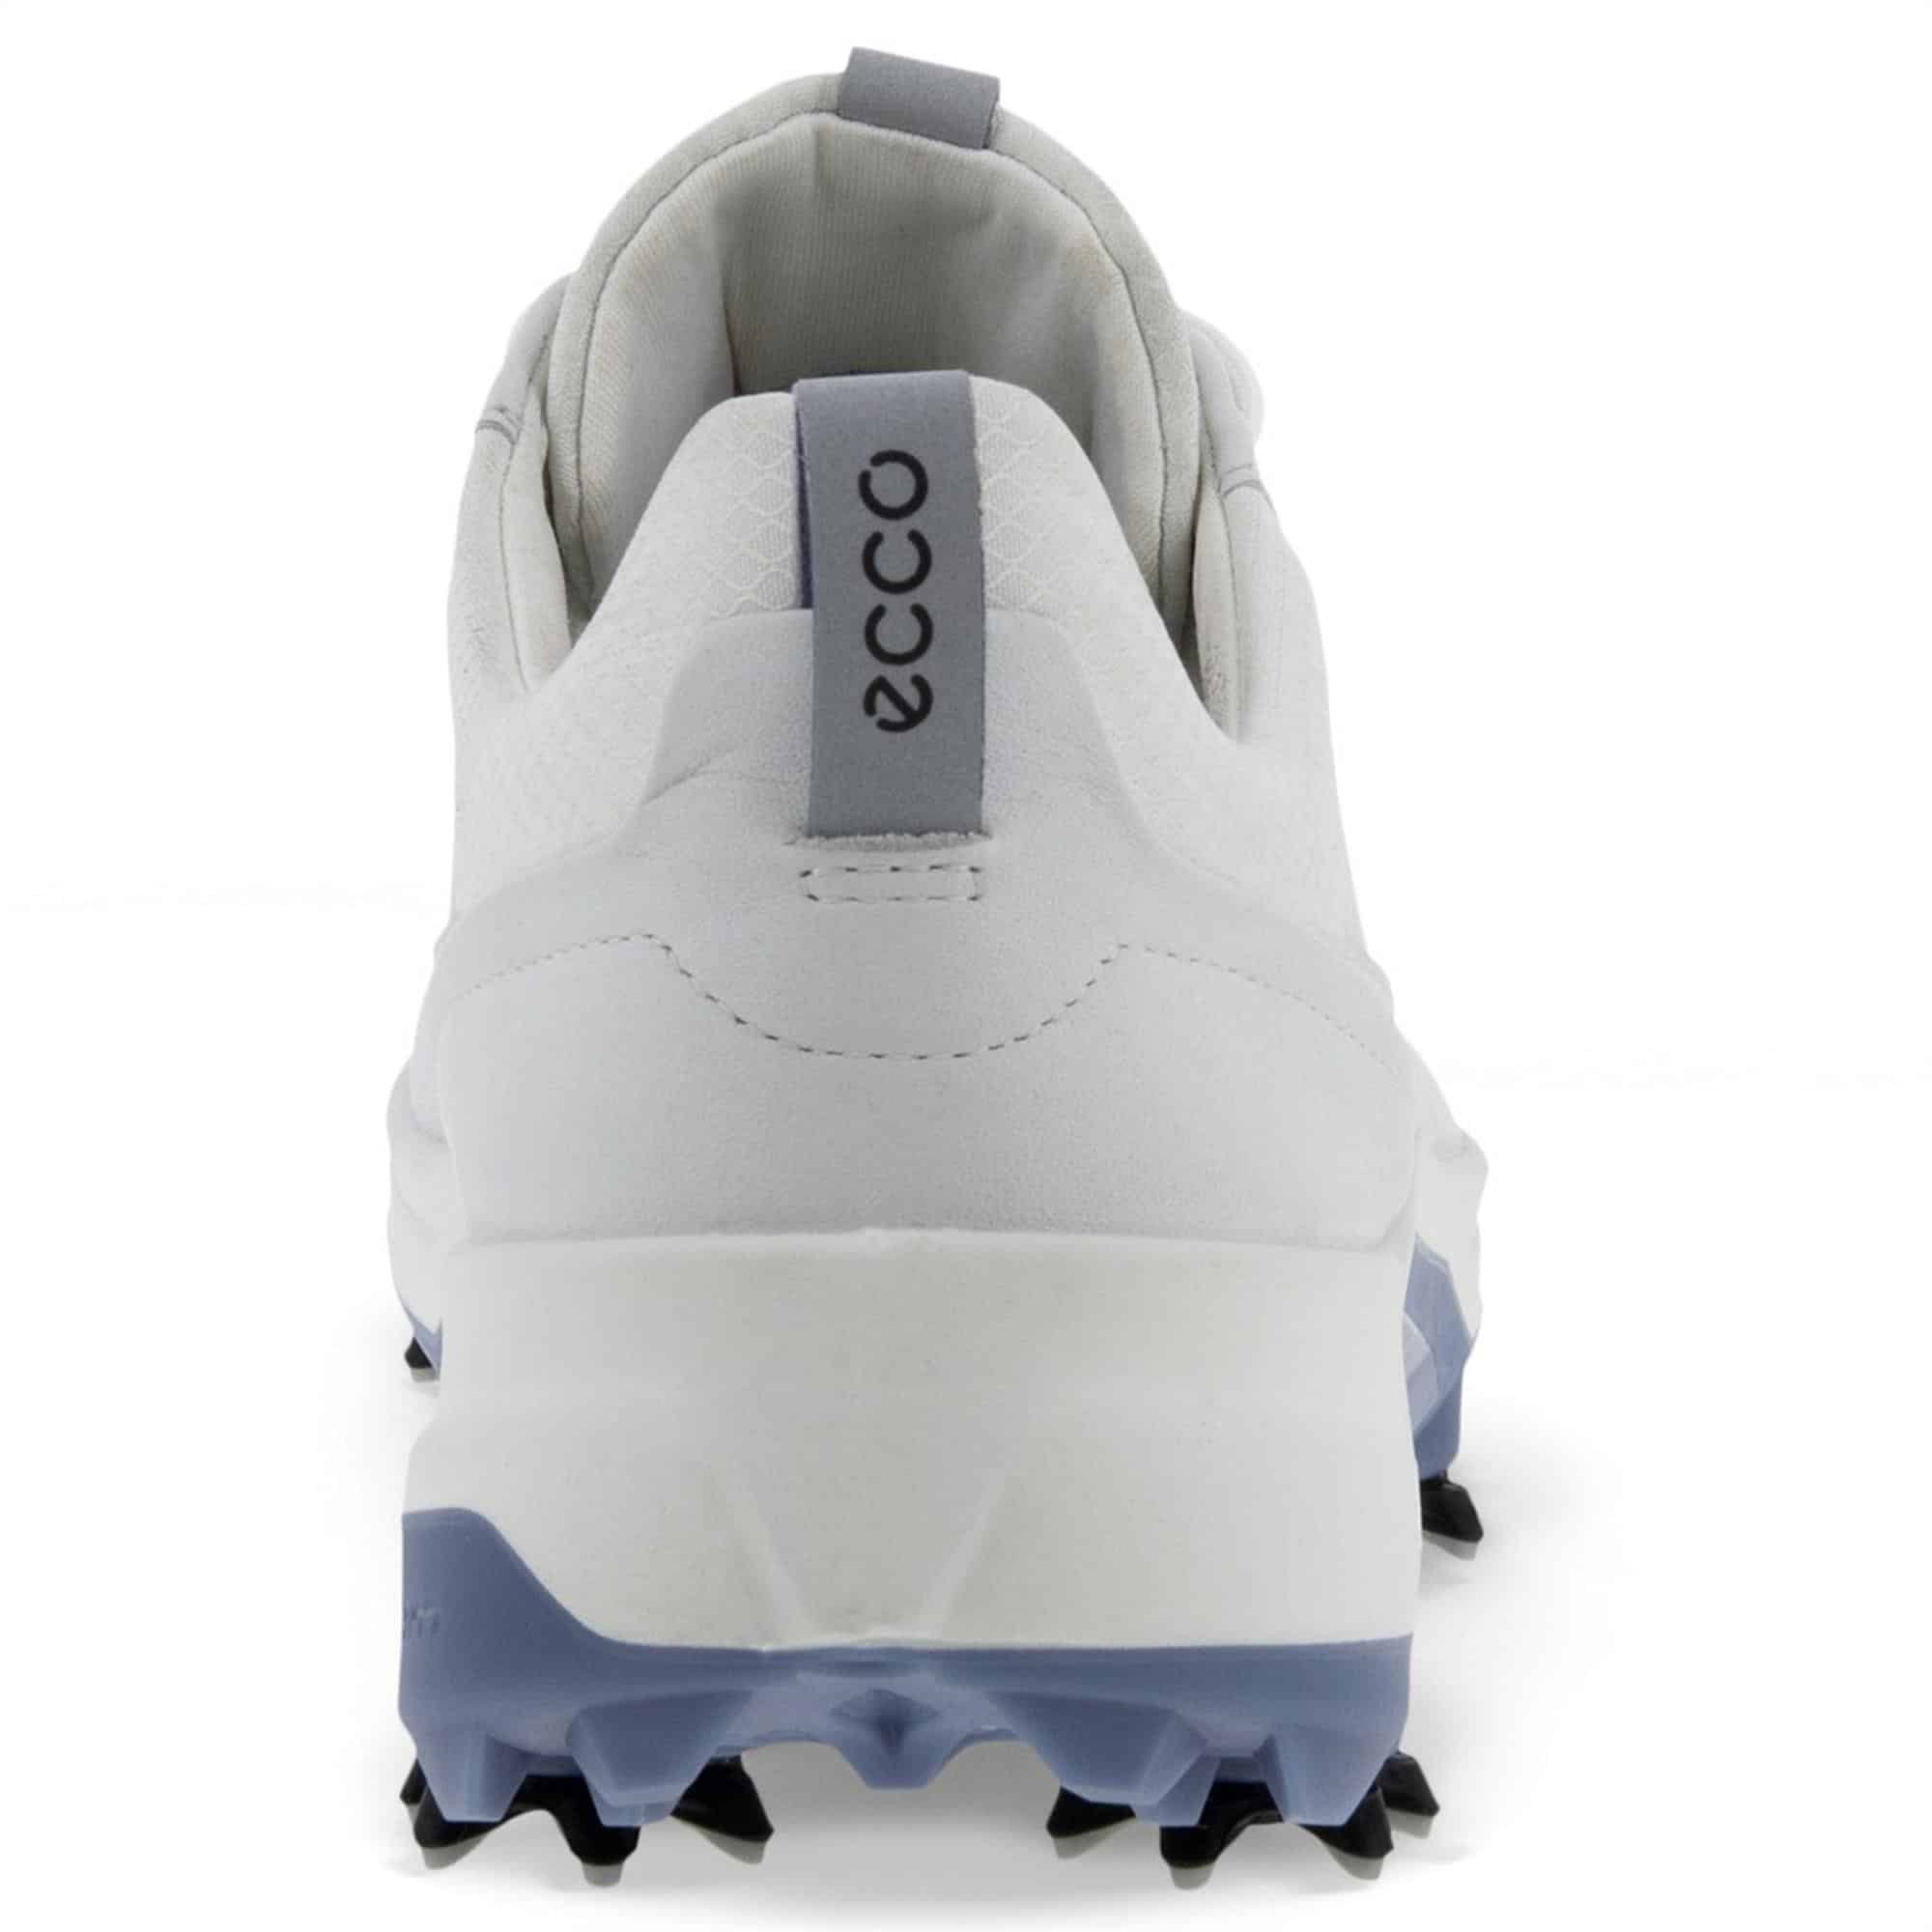 ECCO chaussures M Golf Biom G5 white blue